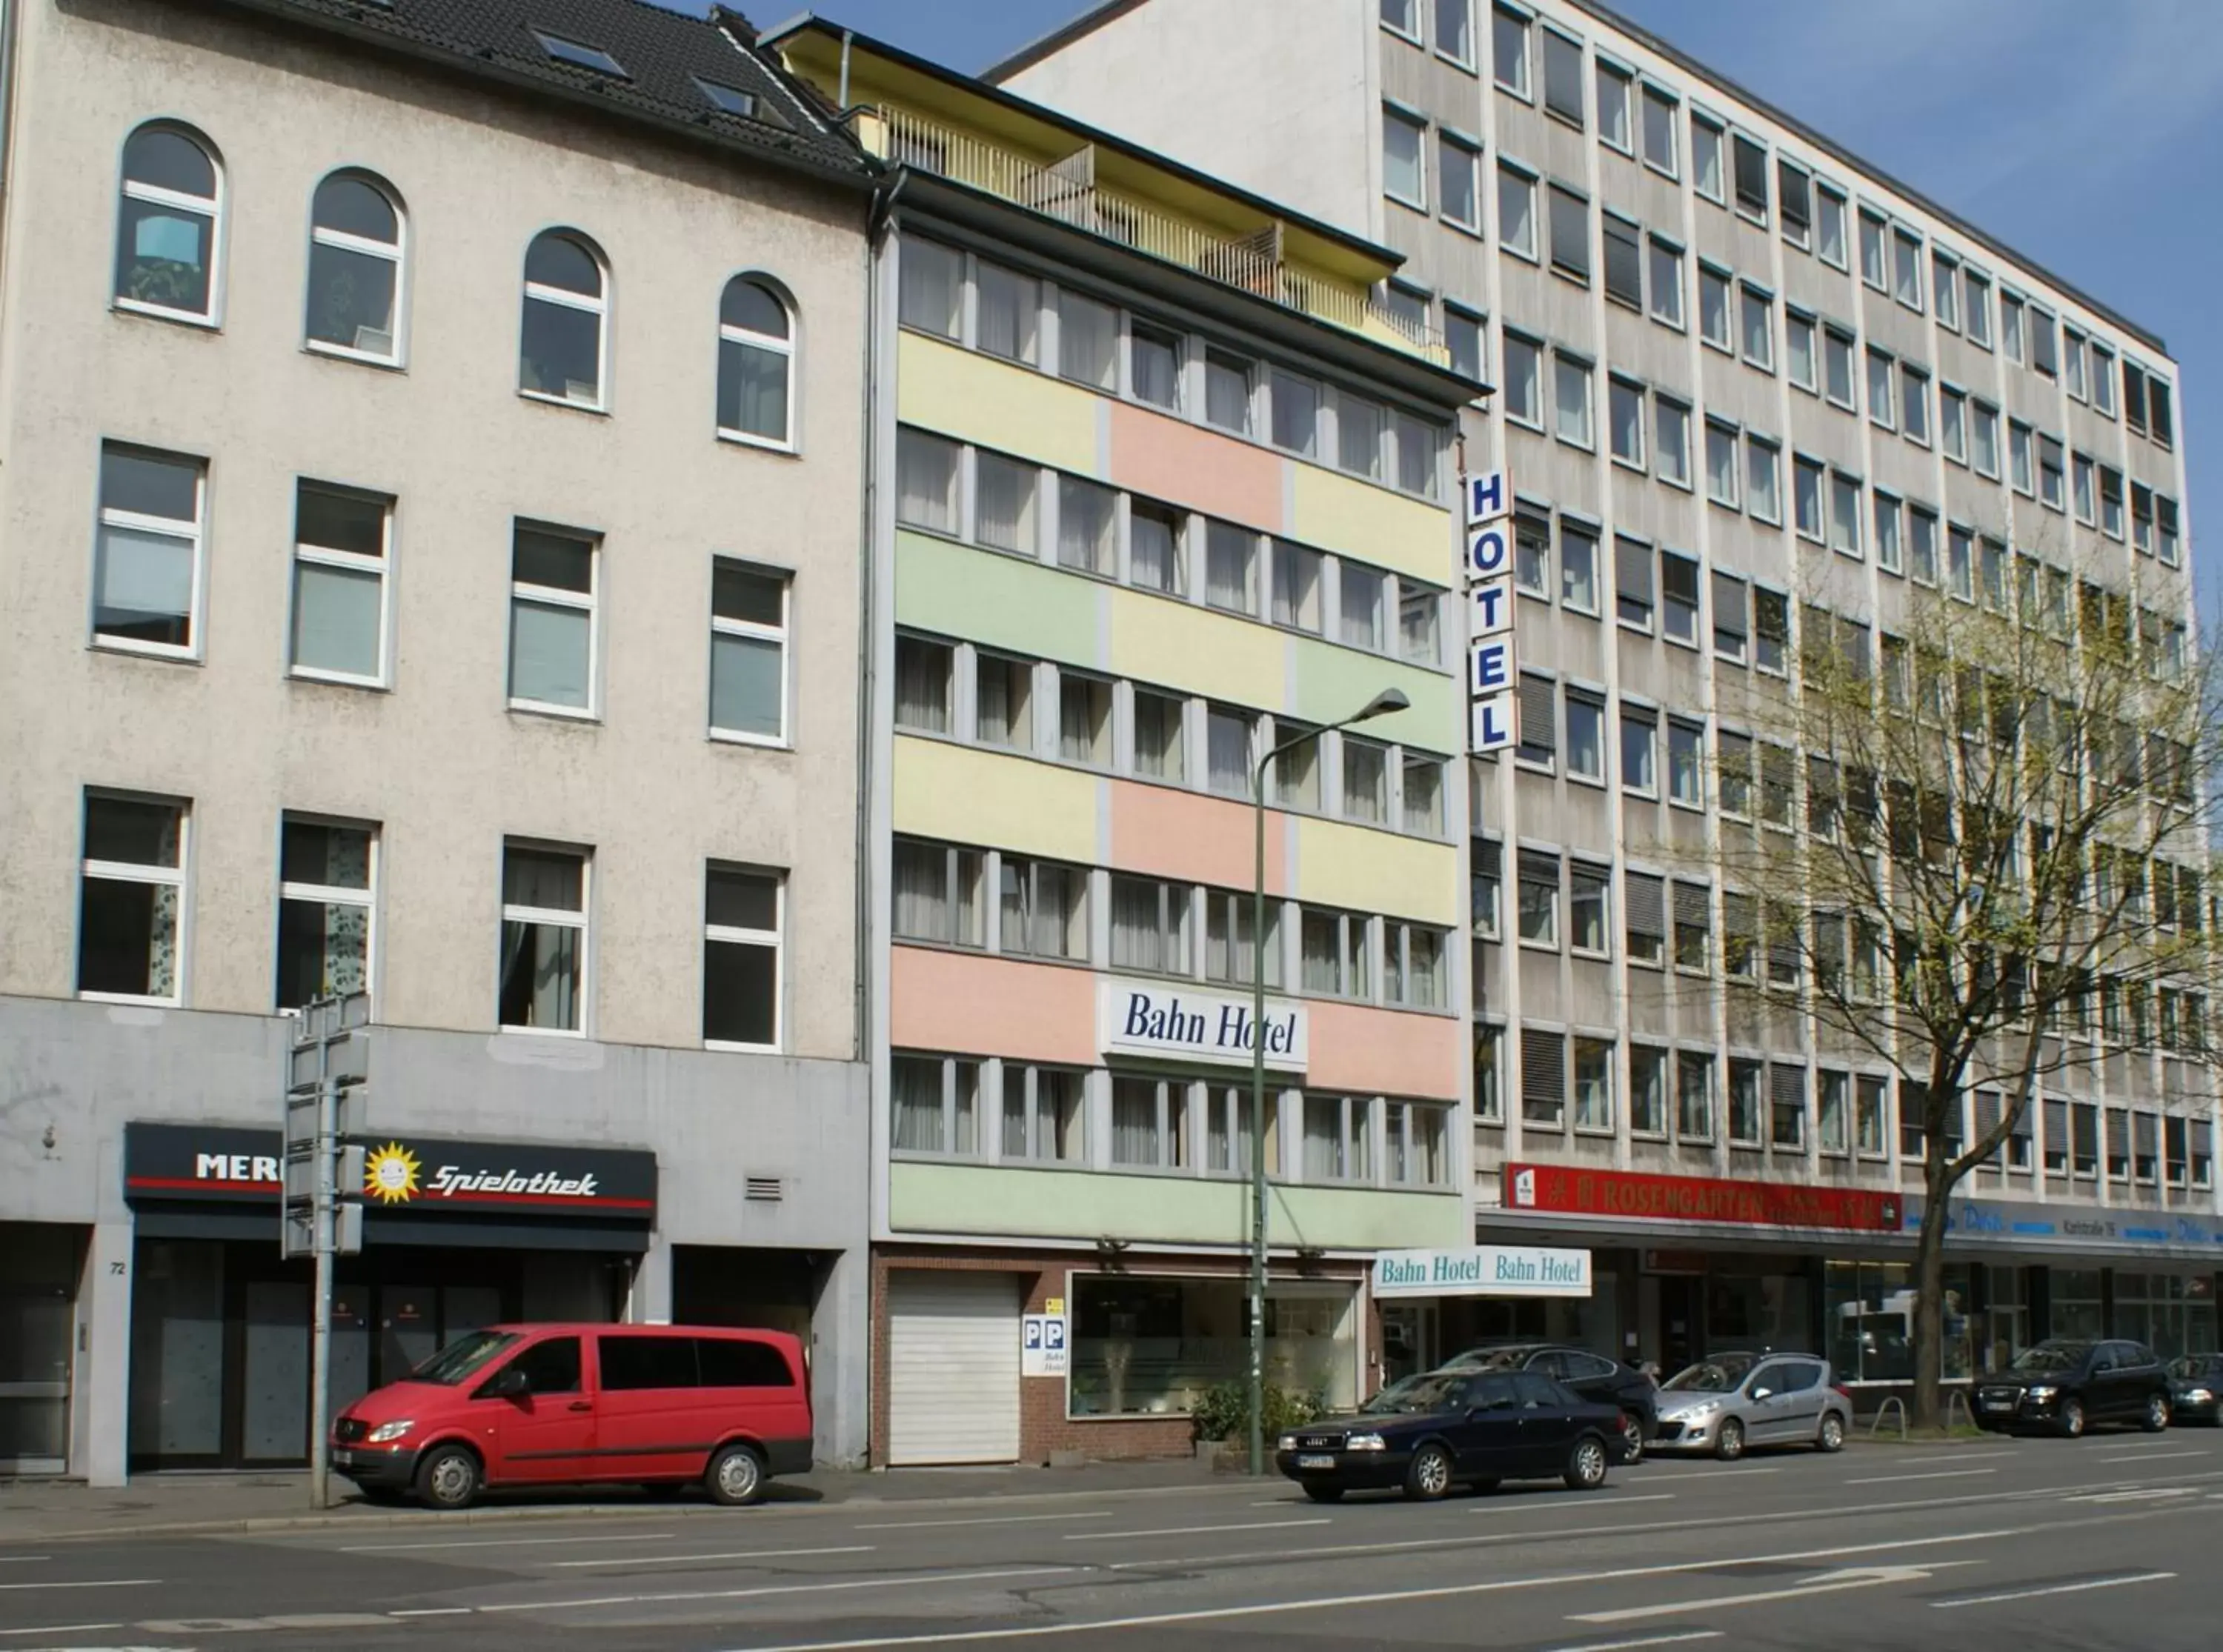 Facade/entrance, Property Building in Bahn-Hotel